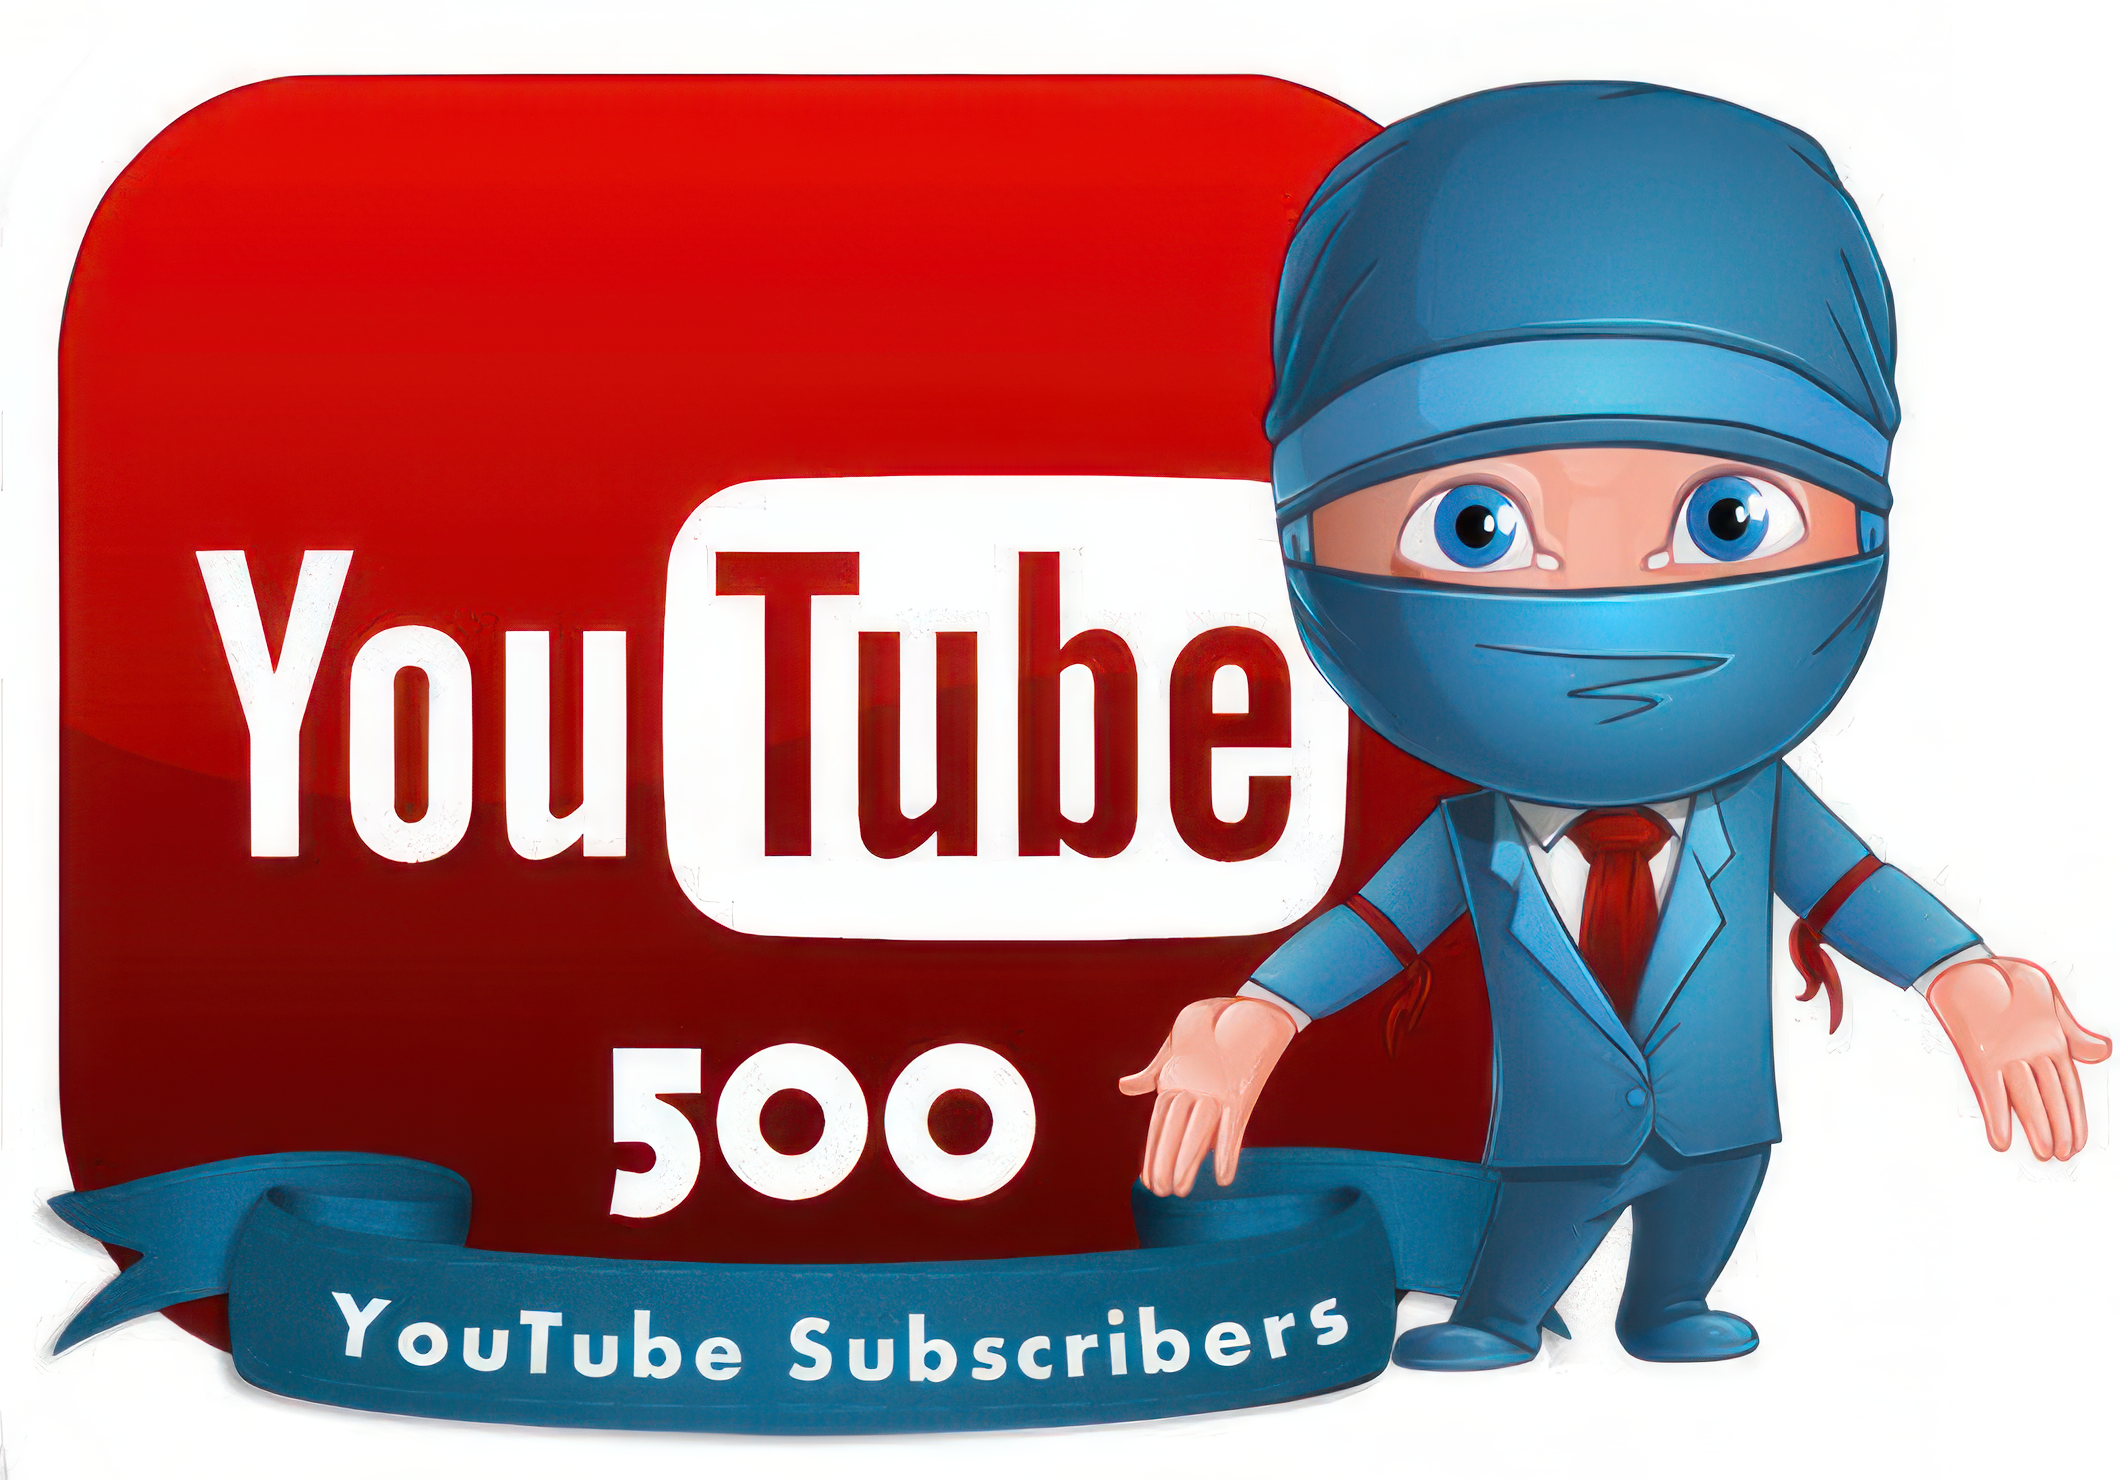 500 youtube subscribers